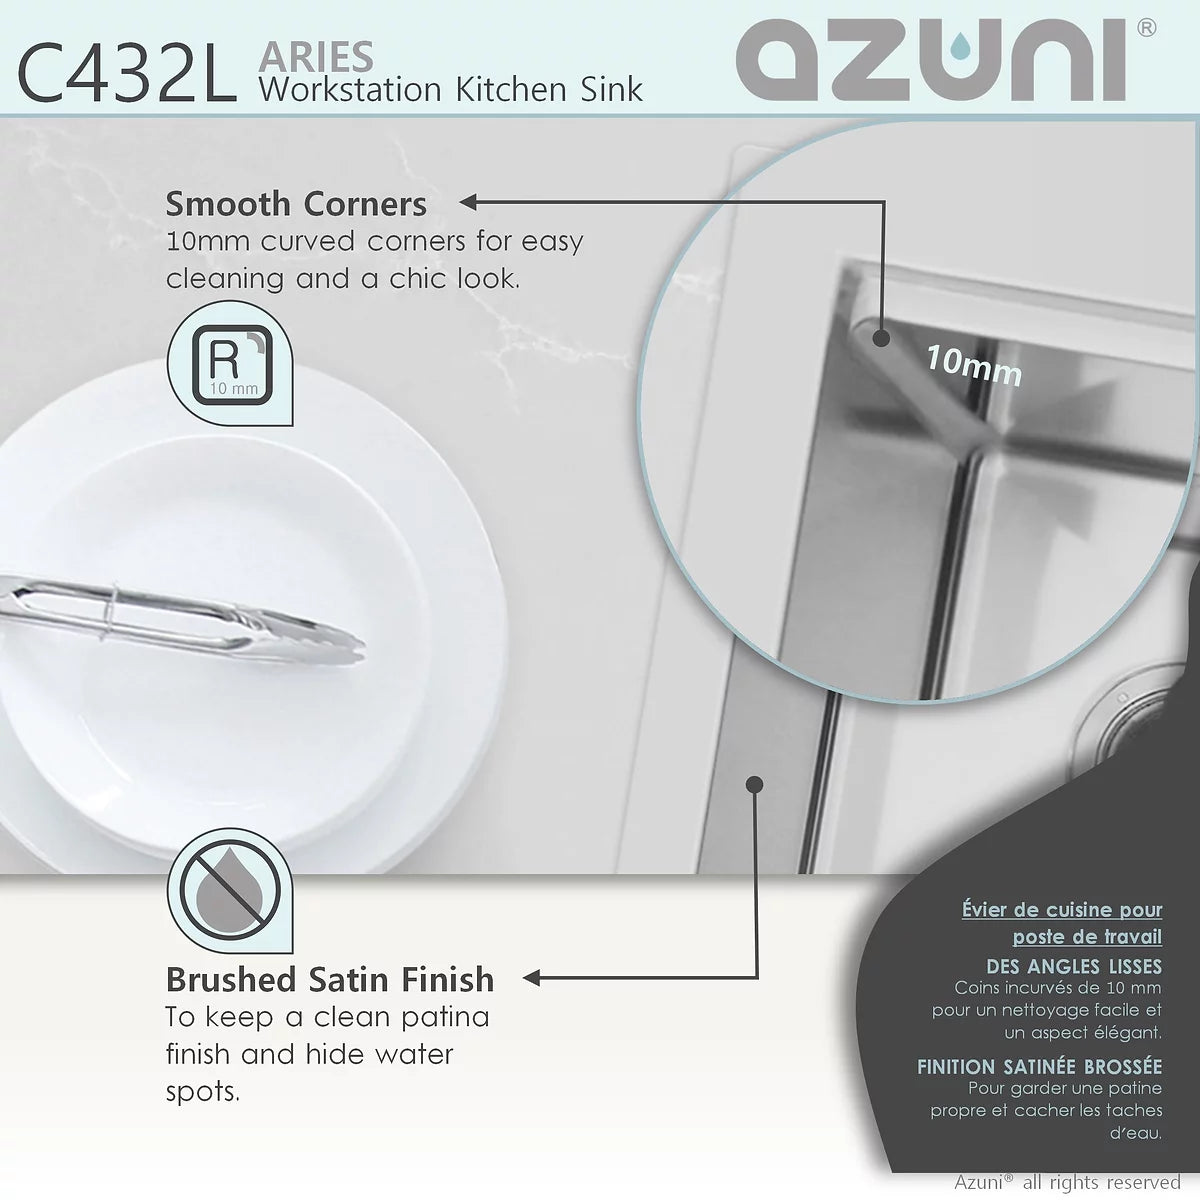 Azuni Aries 31” x 20.5" Workstation Double Bowl Kitchen Sink Stainless Steel C432L